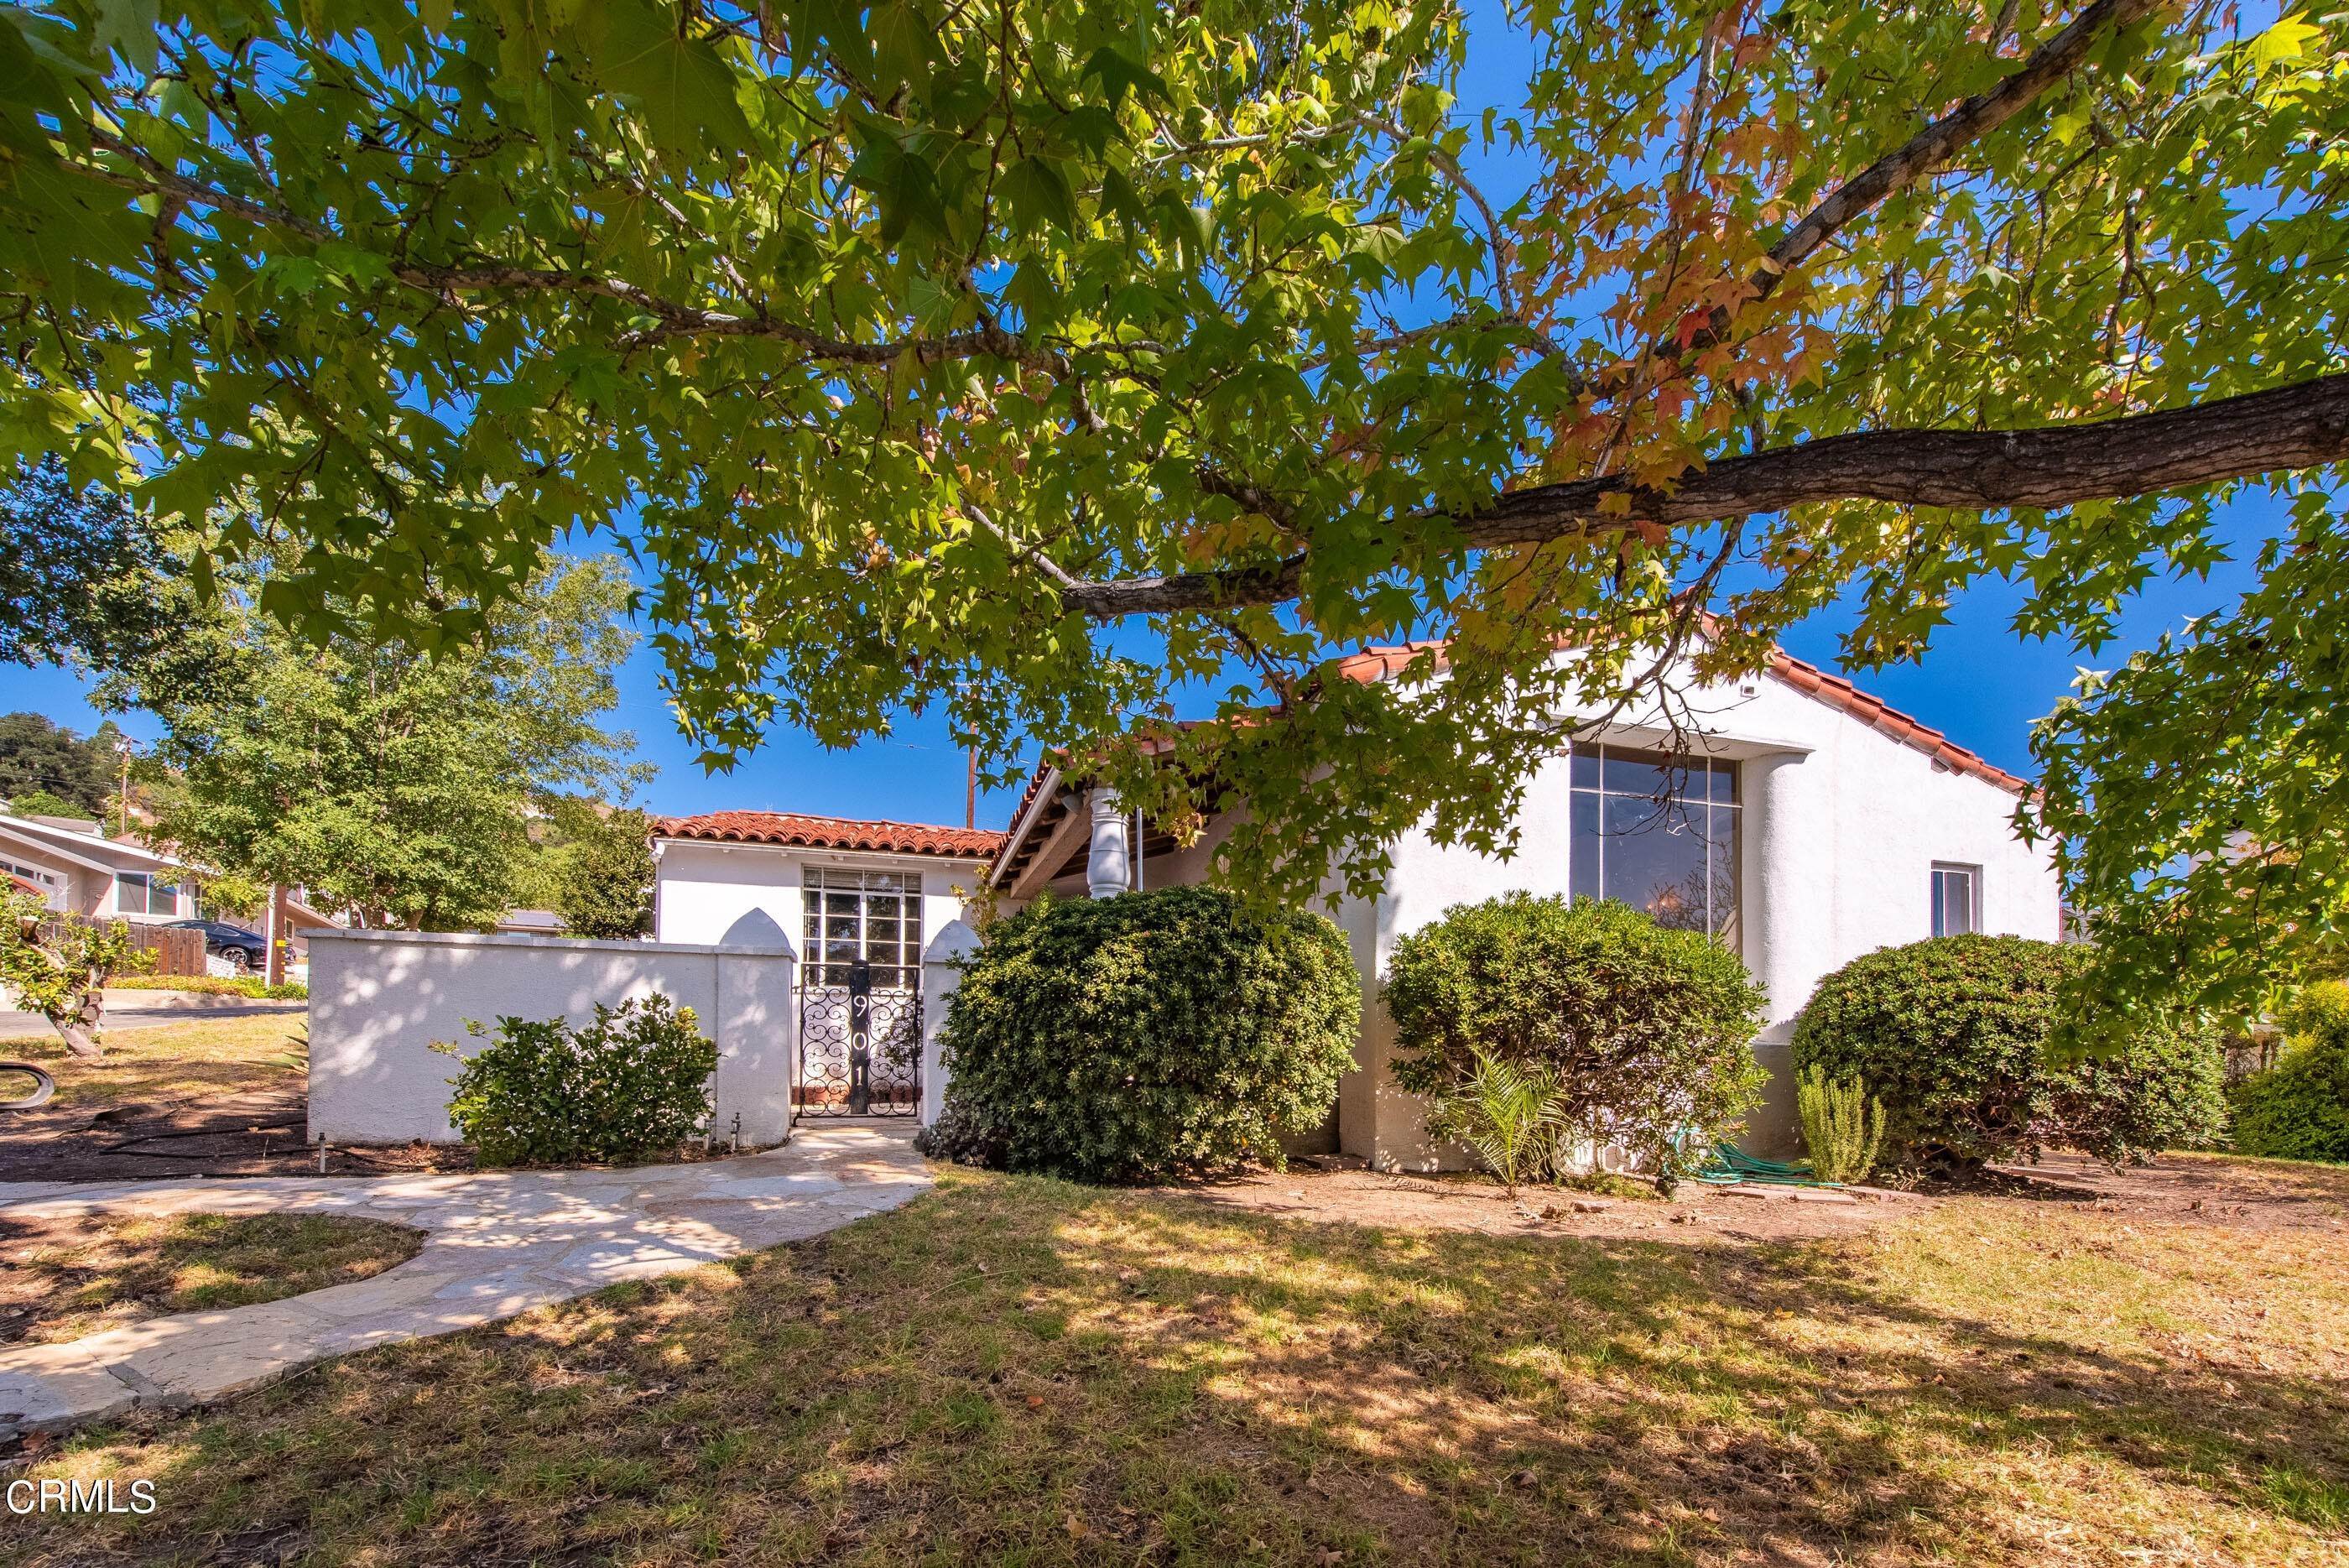 3. Single Family Homes for Sale at 901 Teague Drive Santa Paula, California 93060 United States